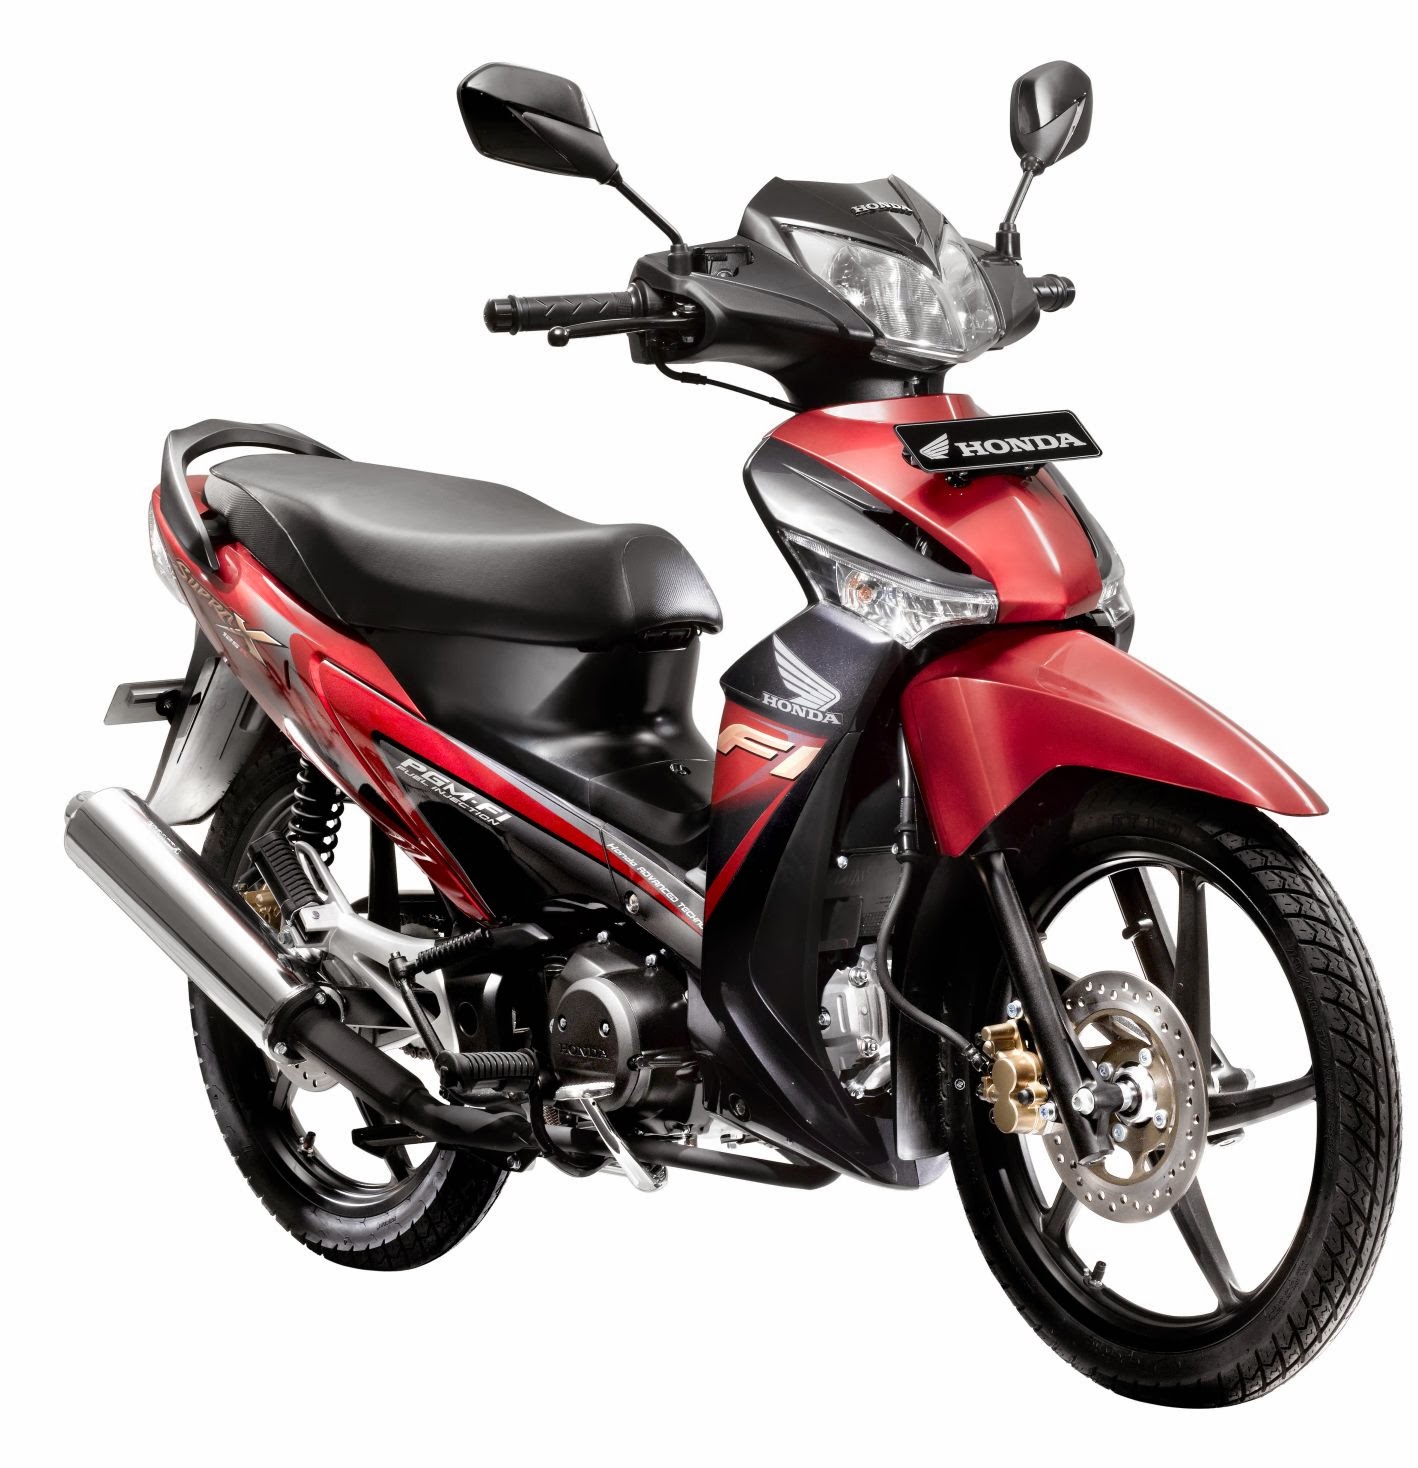 HARGA SPESIFIKASI New Honda Supra X 125 FI Motor Terbaru 2014 Fresh Info